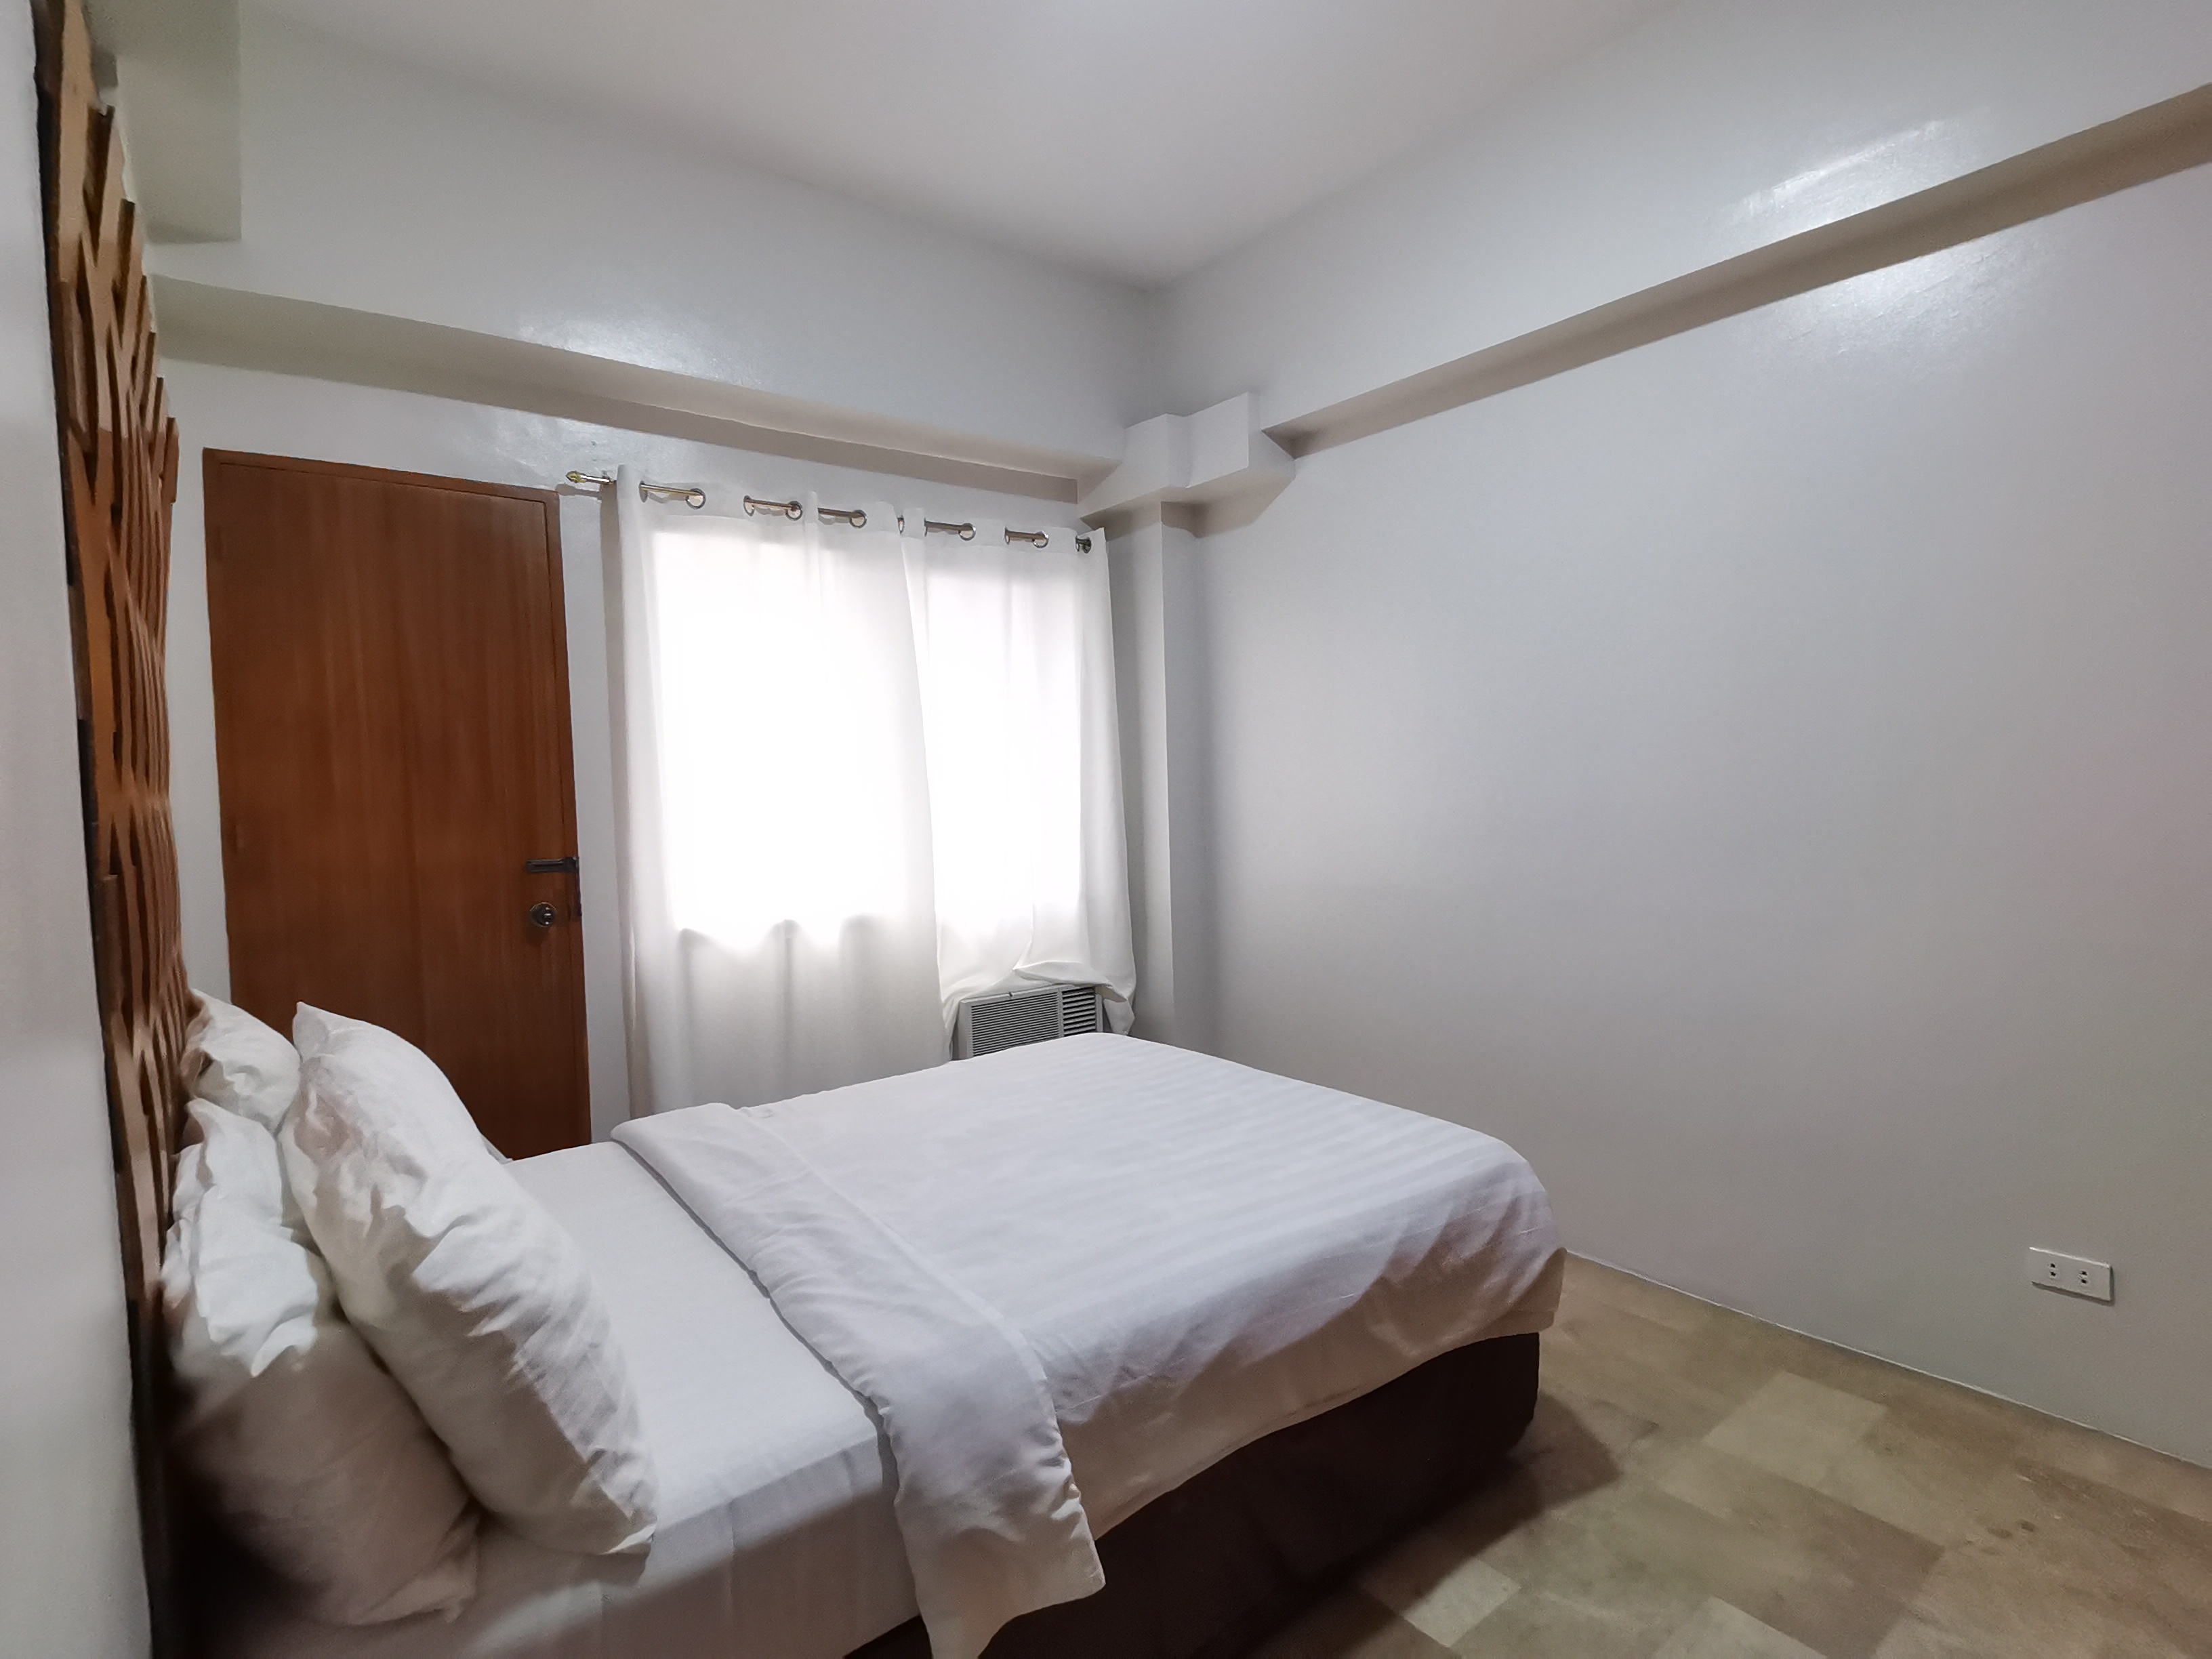 2 Bedrooms for Rent in Cebu City near Landers Supermarket